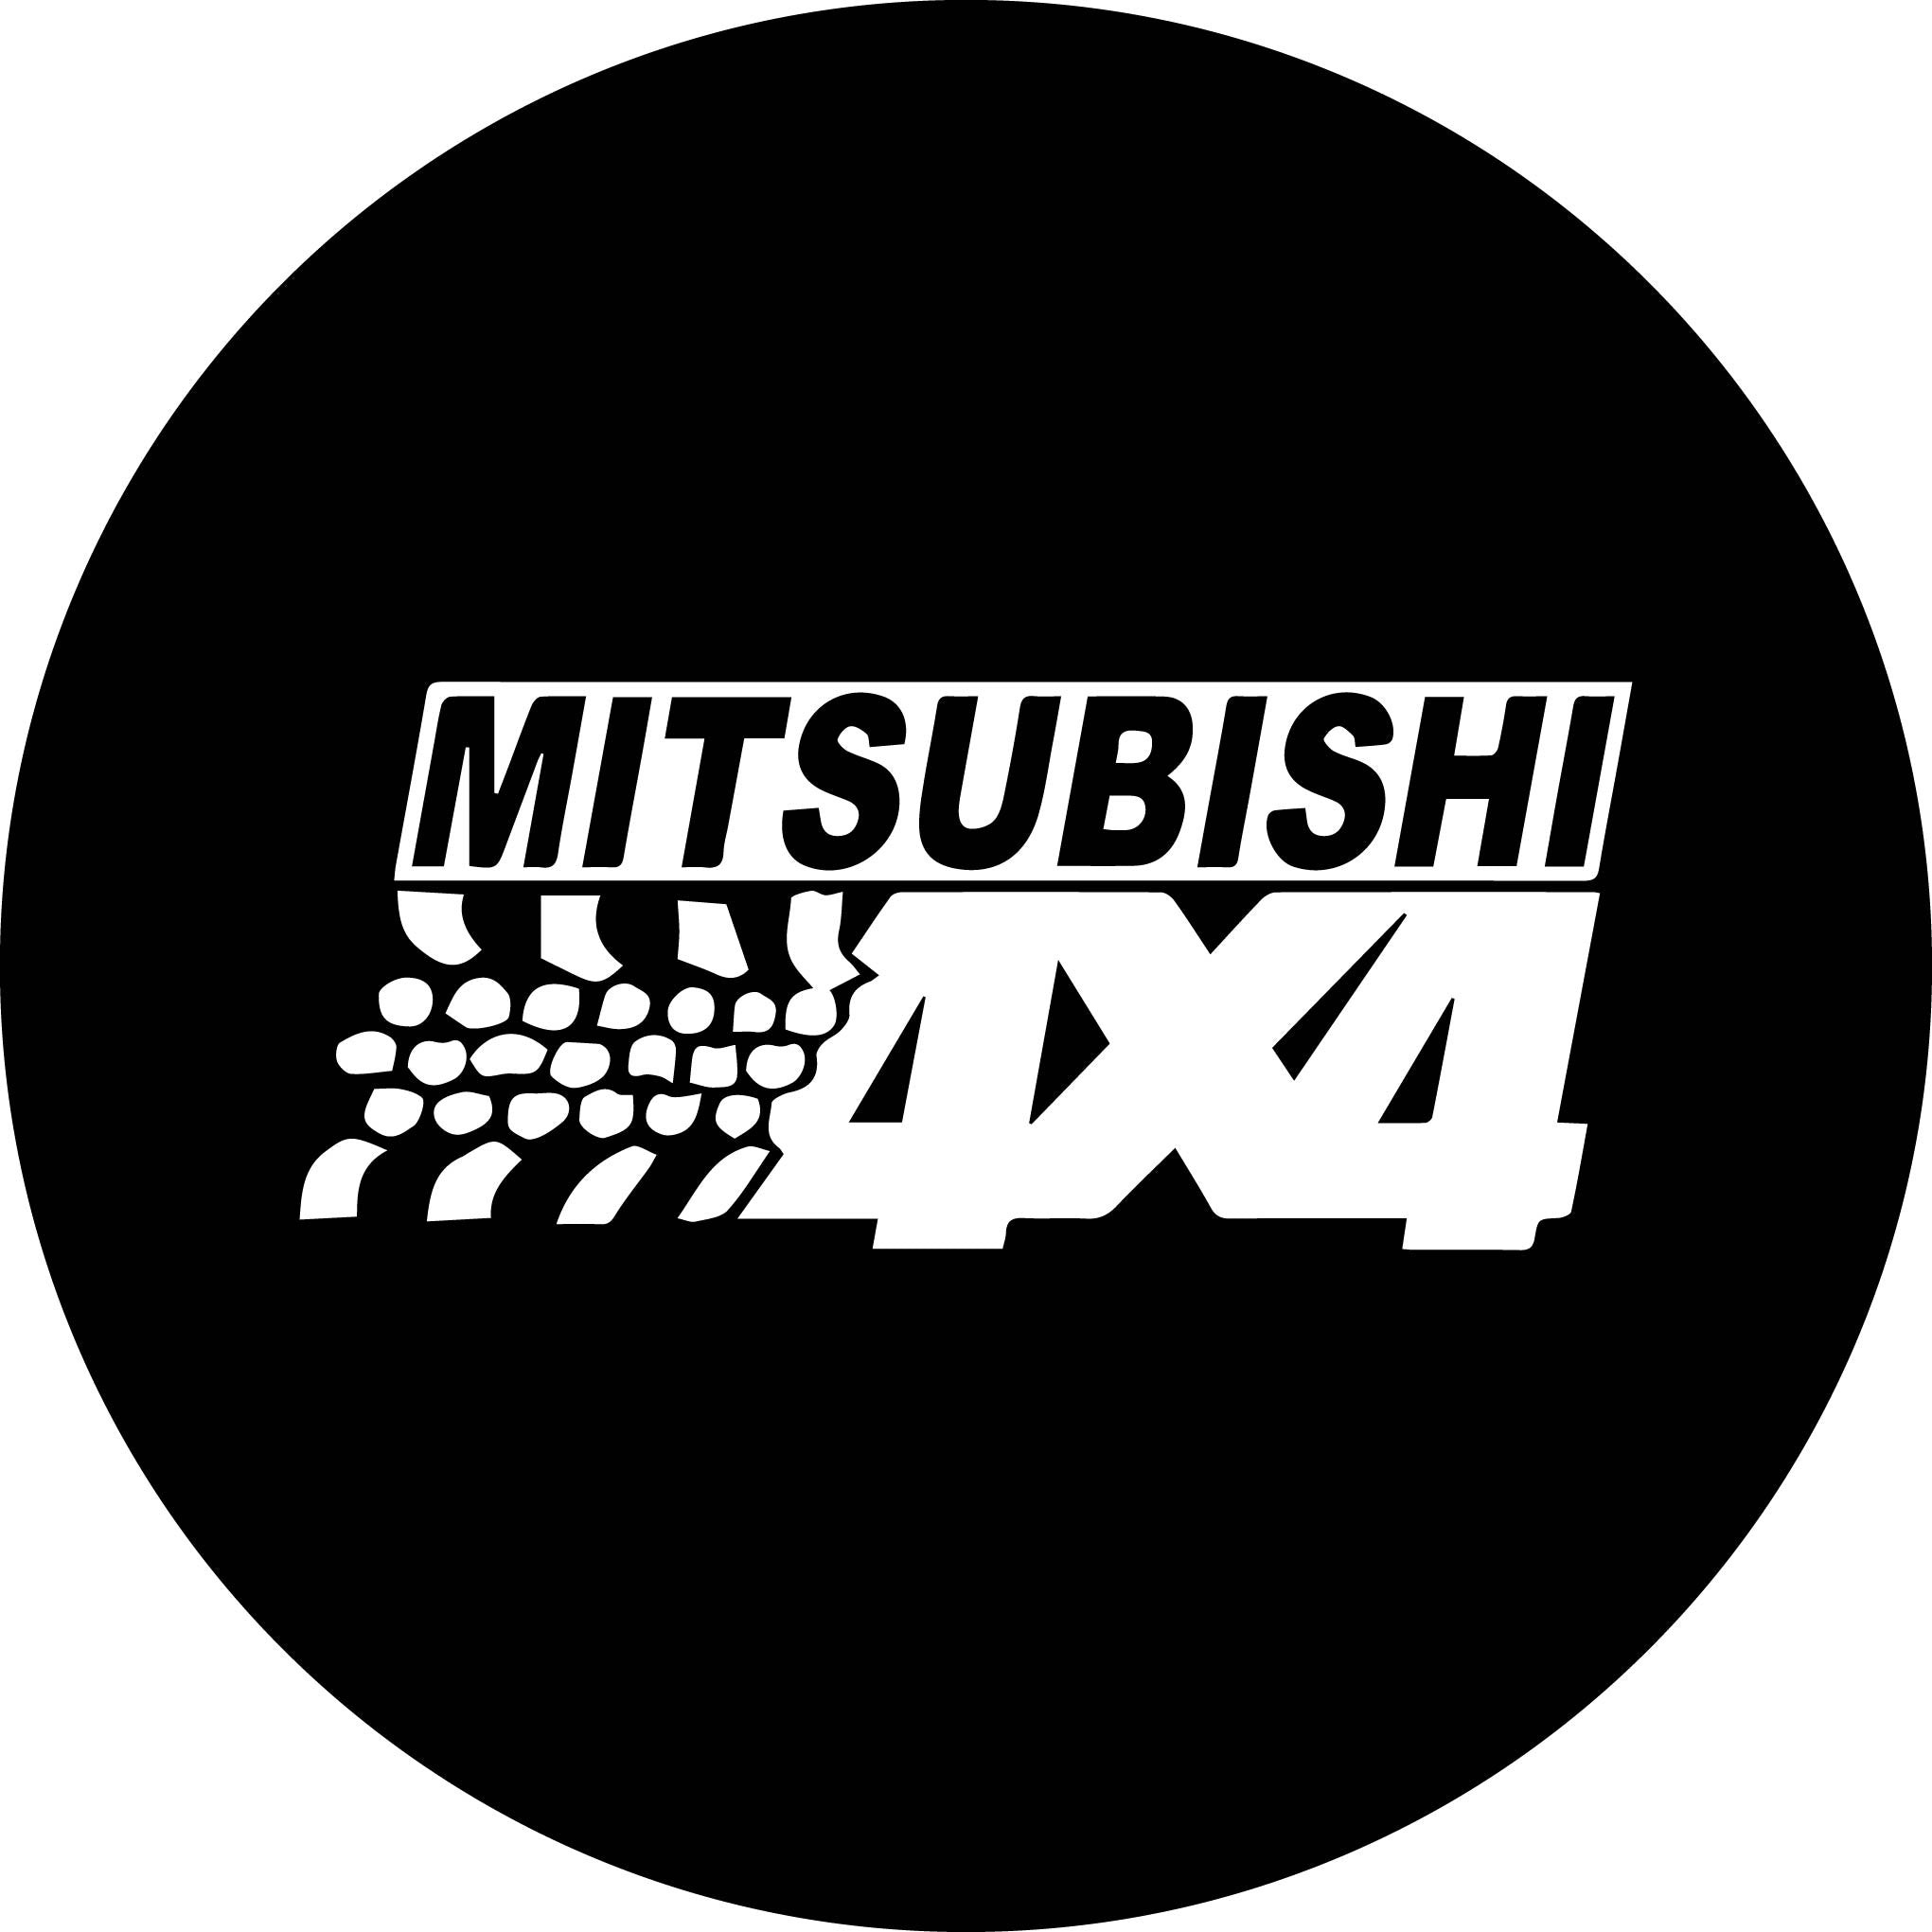 Mitsubishi 4x4 Tasarımı Stepne Kılıfı